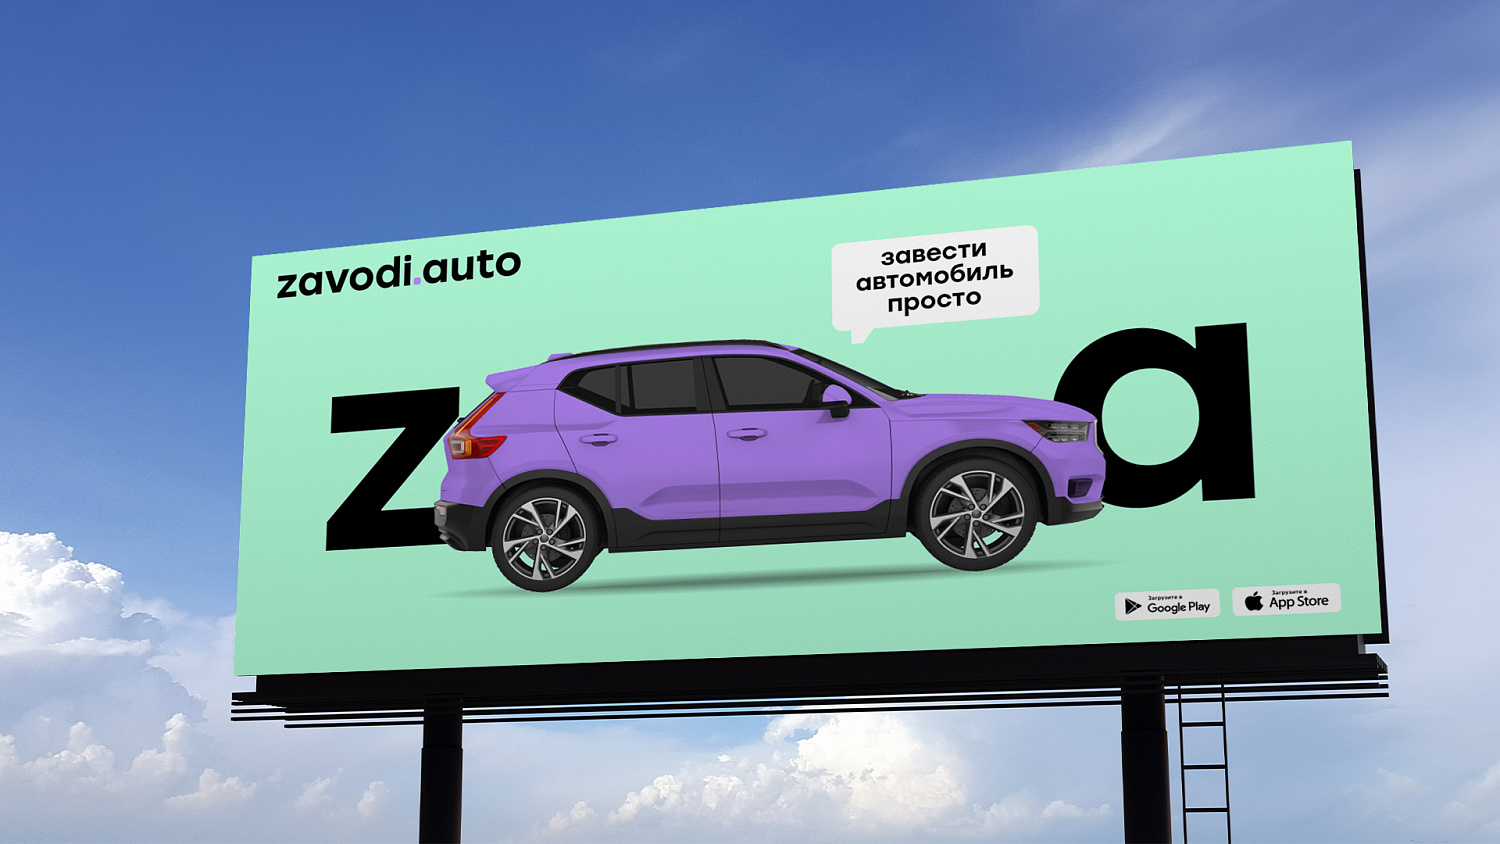 ZAVODI.AUTO: Нейминг и фирменный стиль для сайта объявлений о продаже автомобилей - Портфолио Depot